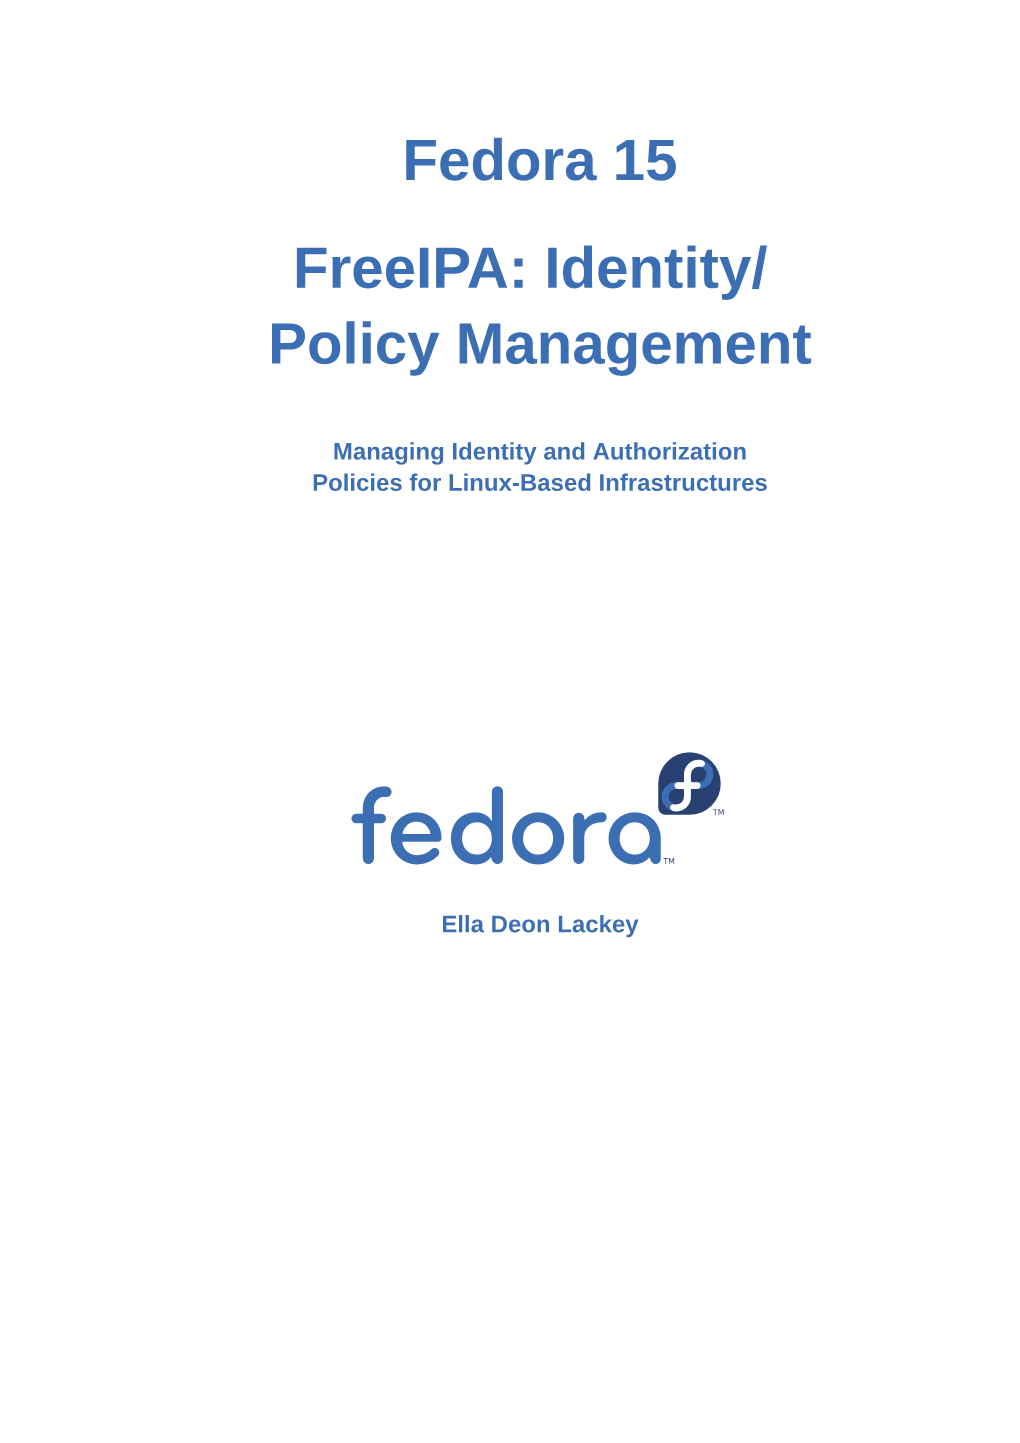 Freeipa: Identity/ Policy Management